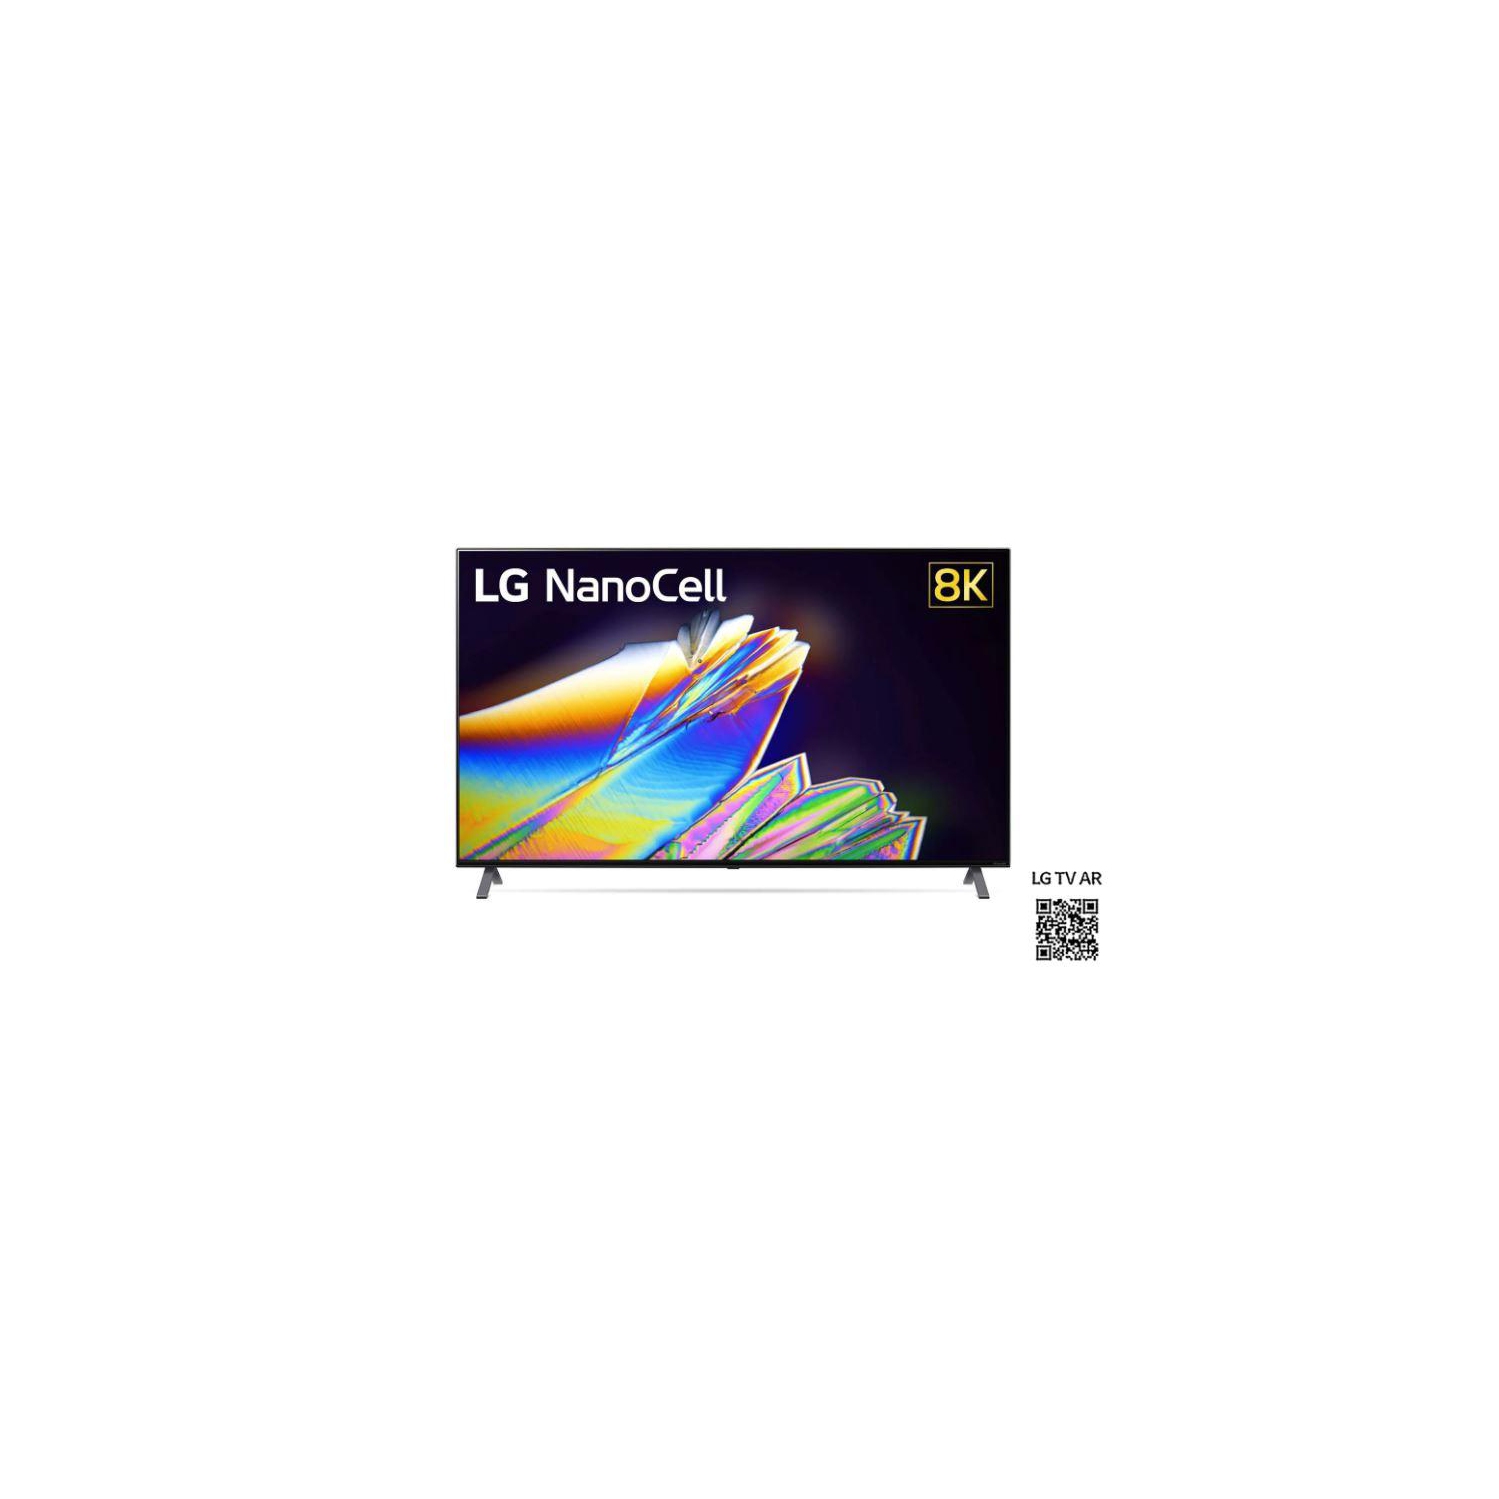 Refurbished (Excellent) - LG 65NANO95 NanoCell 65" 8K UHD HDR LCD webOS Smart TV (Factory Refurbished)